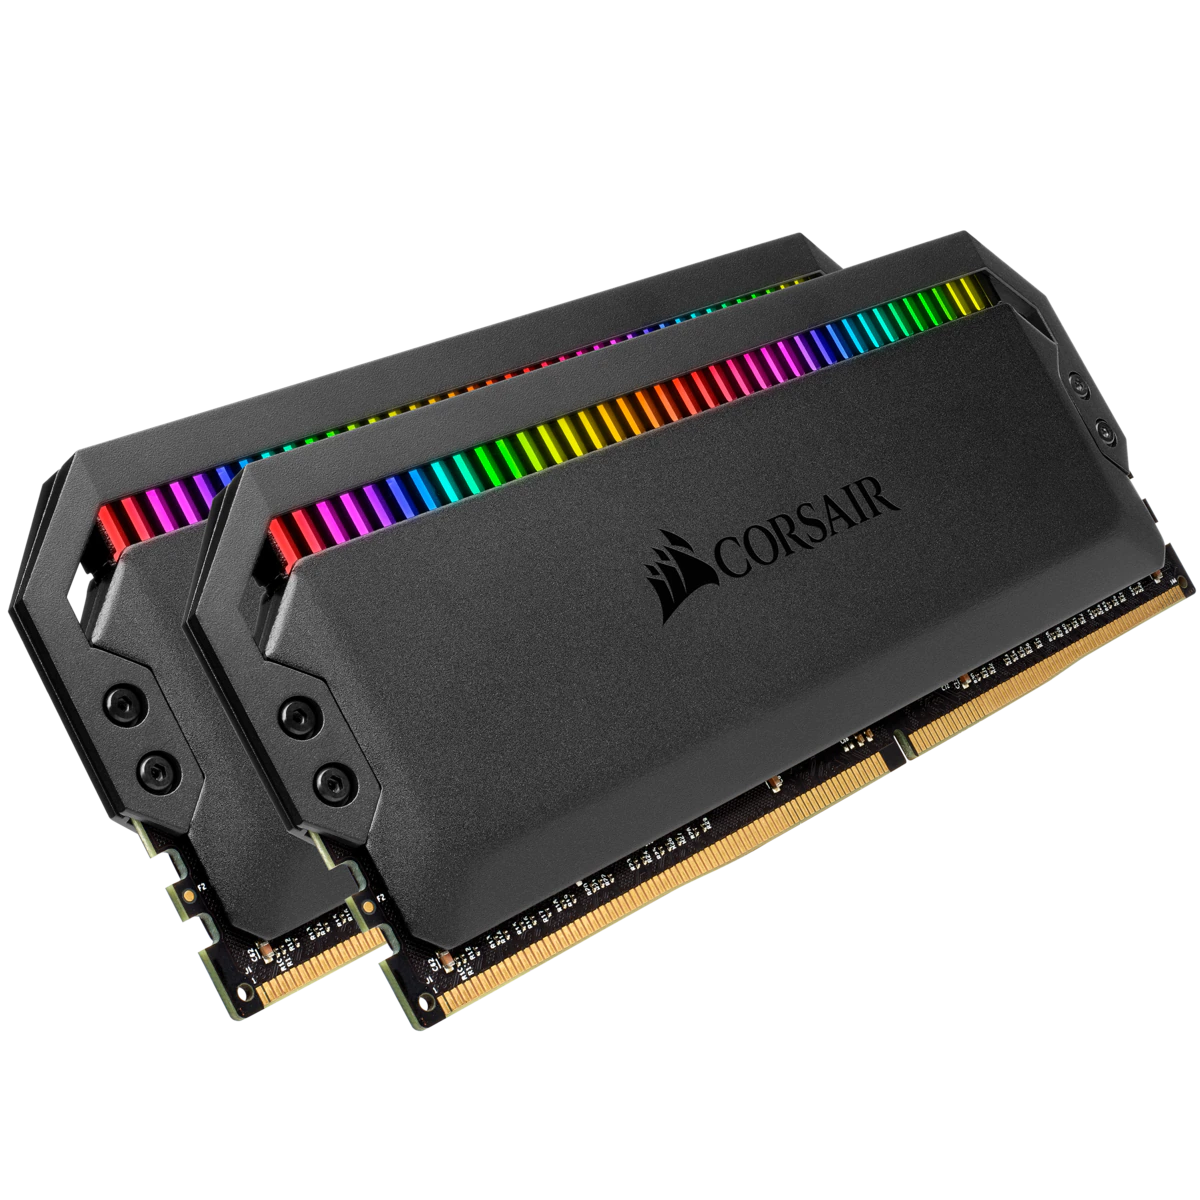 Corsair Dominator Platinum RGB 64GB DDR4 3600MHz SDRAM (2 x 32GB) Memory Kit